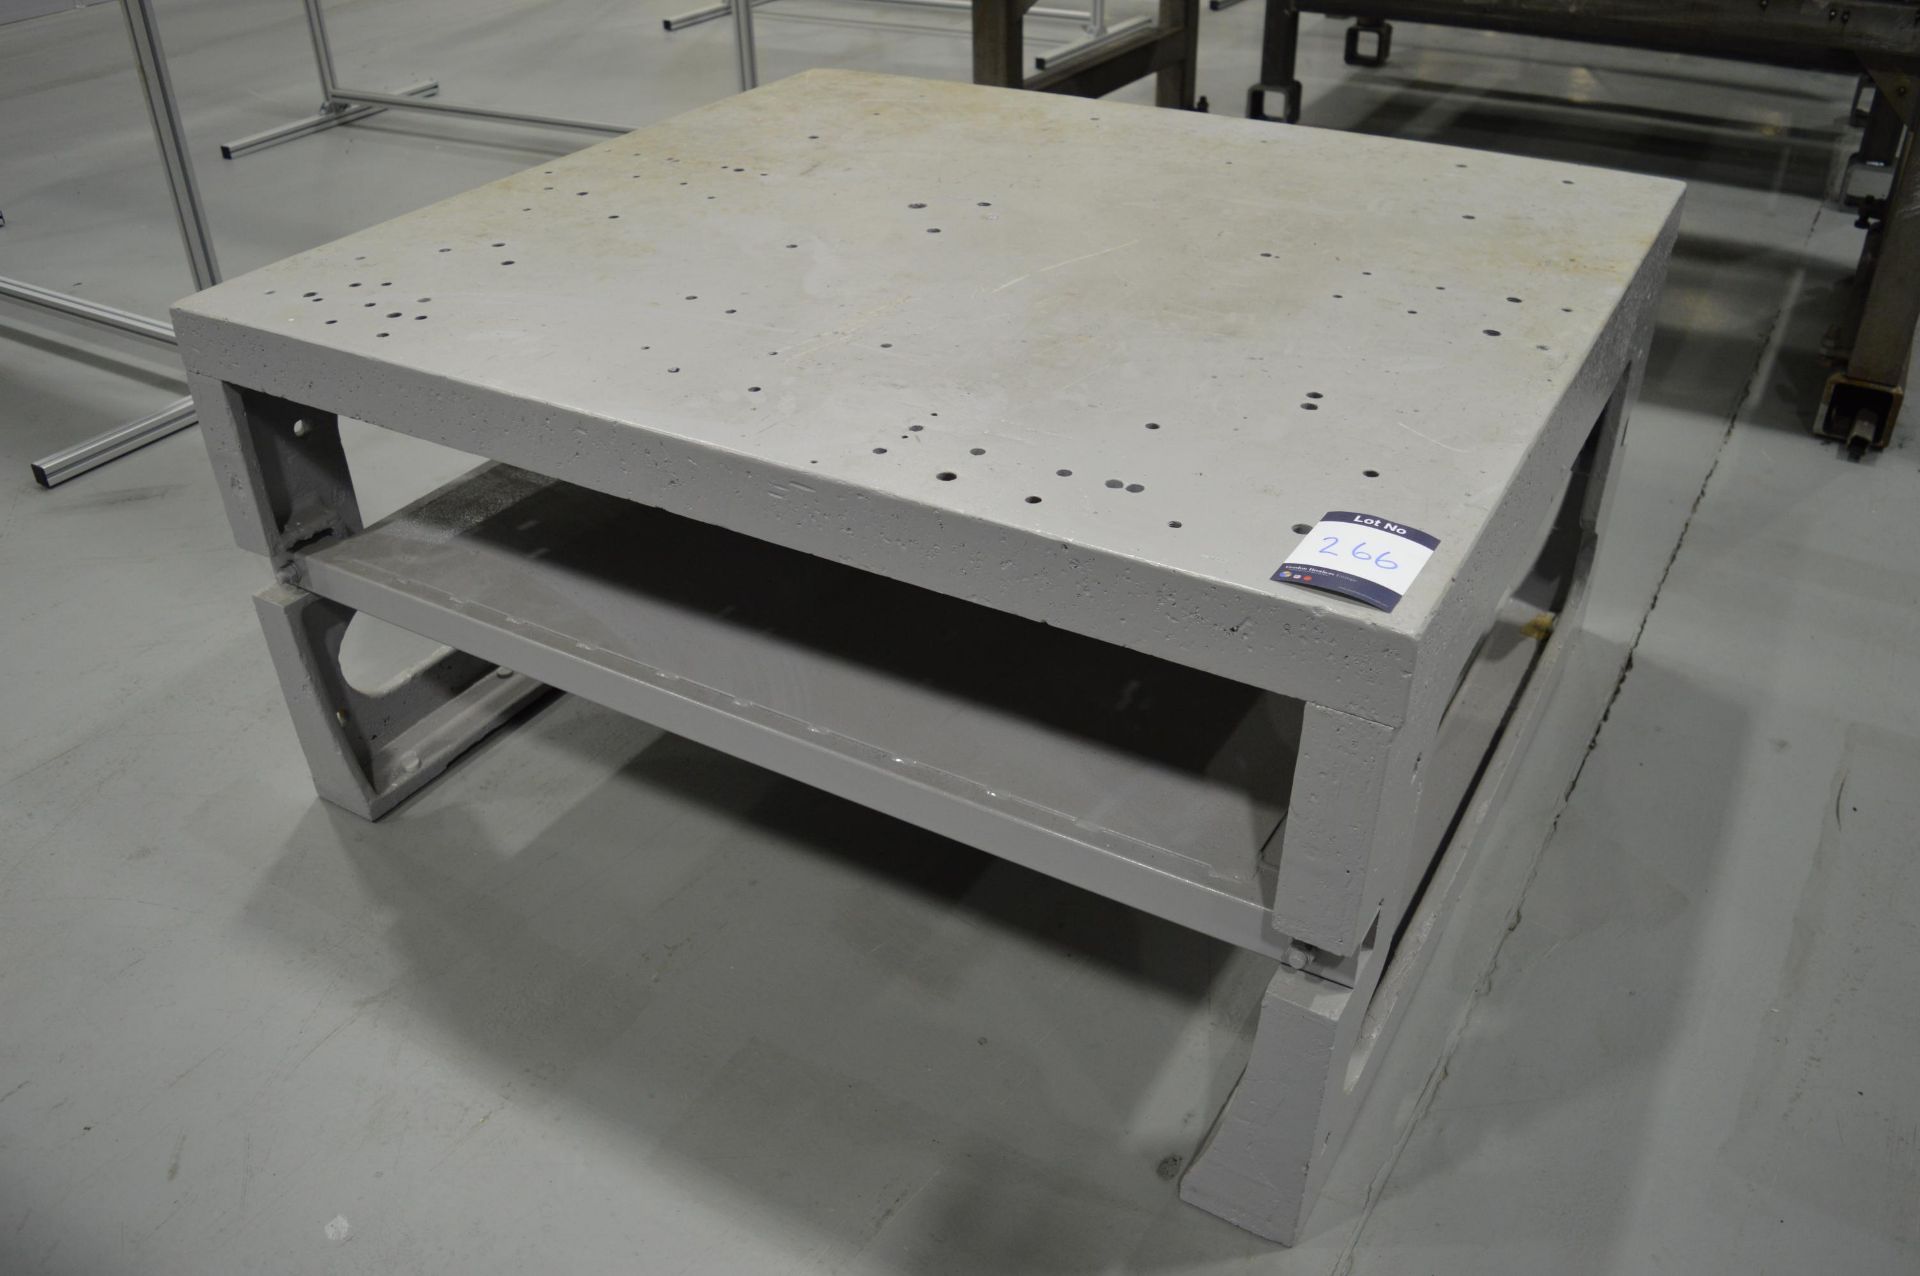 Steel Welding Bench
152cm(W) x 137cm(D) x 76cm(H)